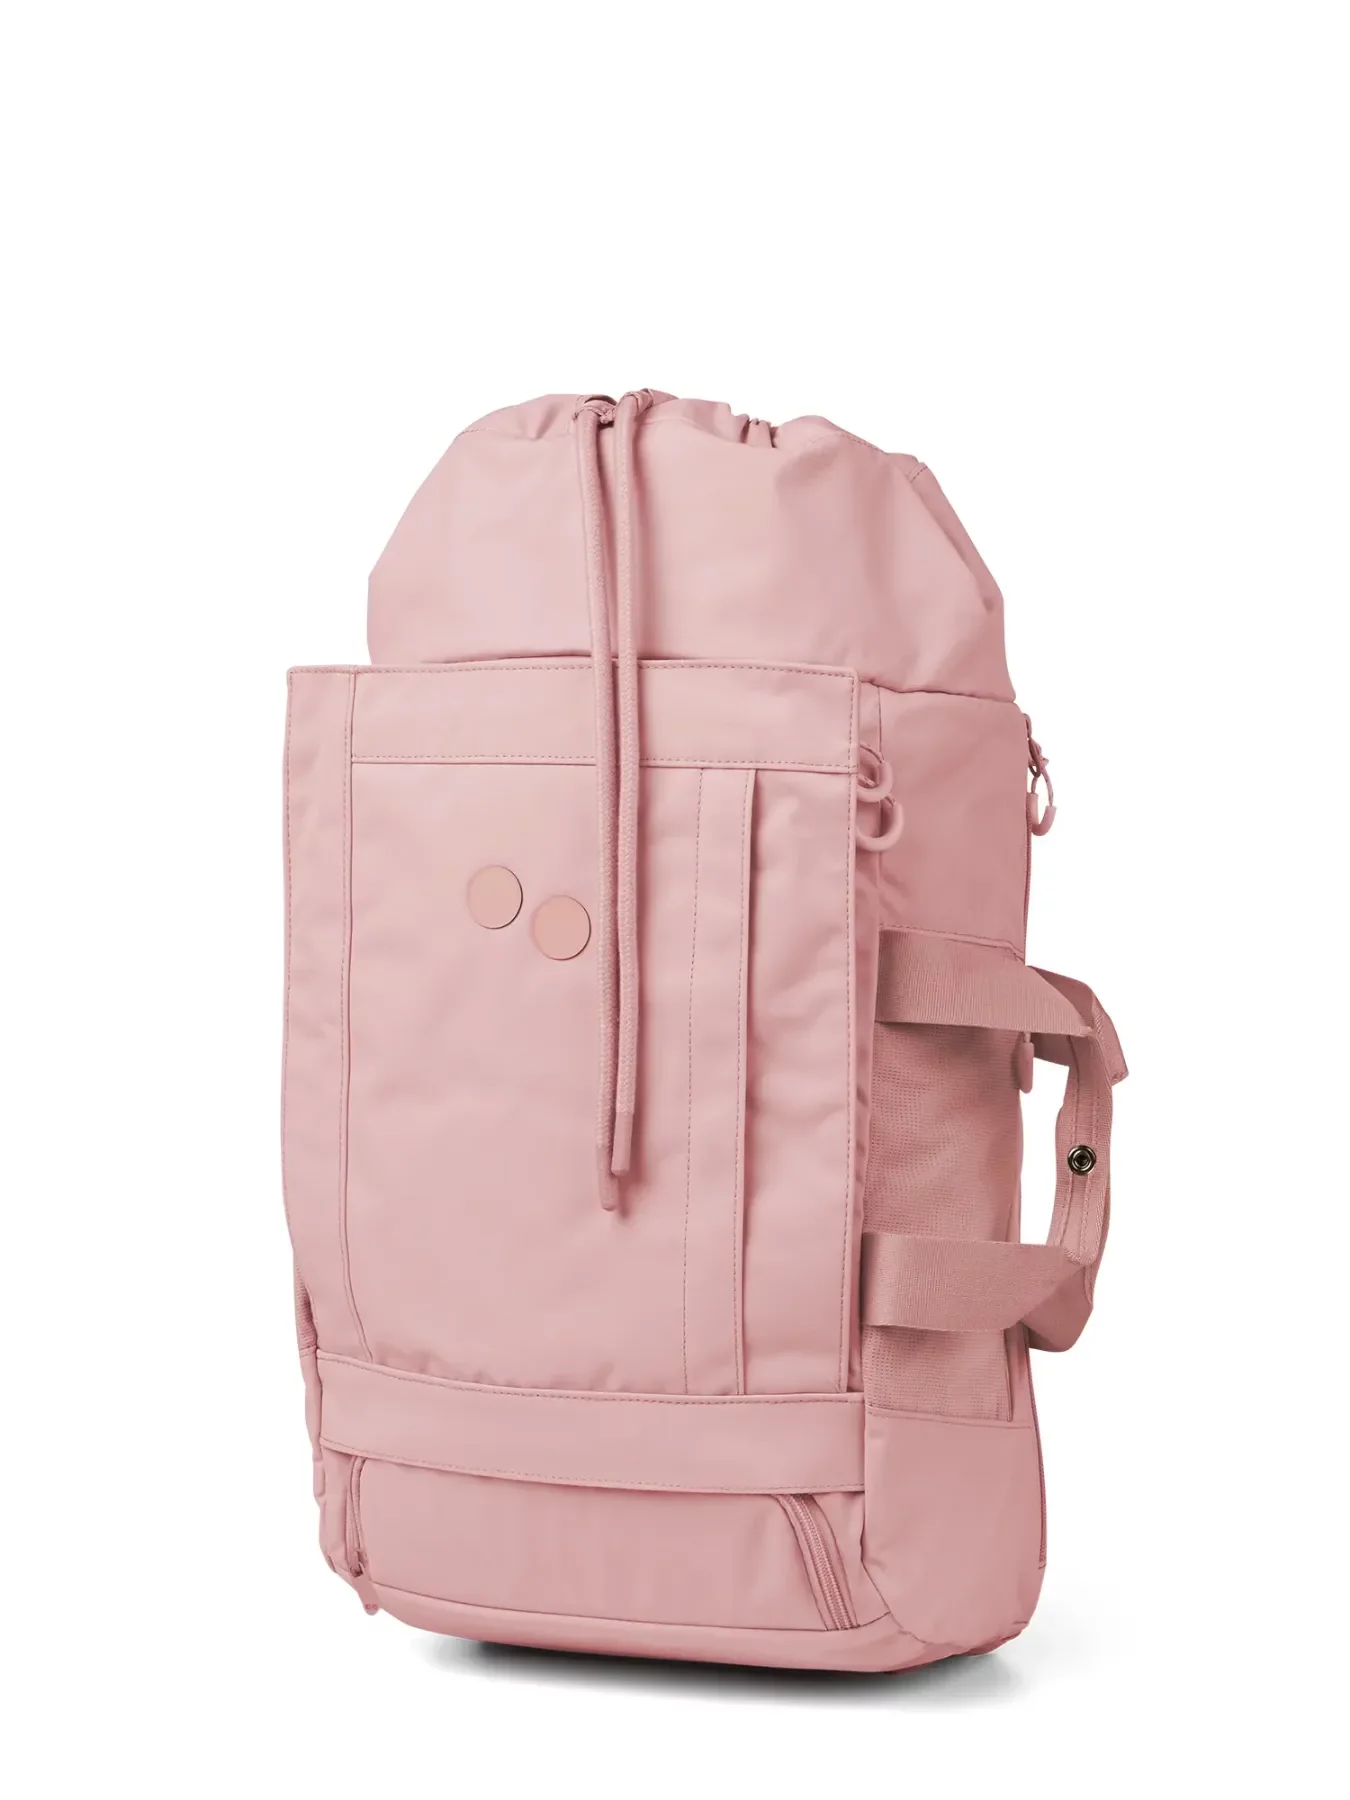 pinqponq Backpack BLOK medium - Ash Pink 3